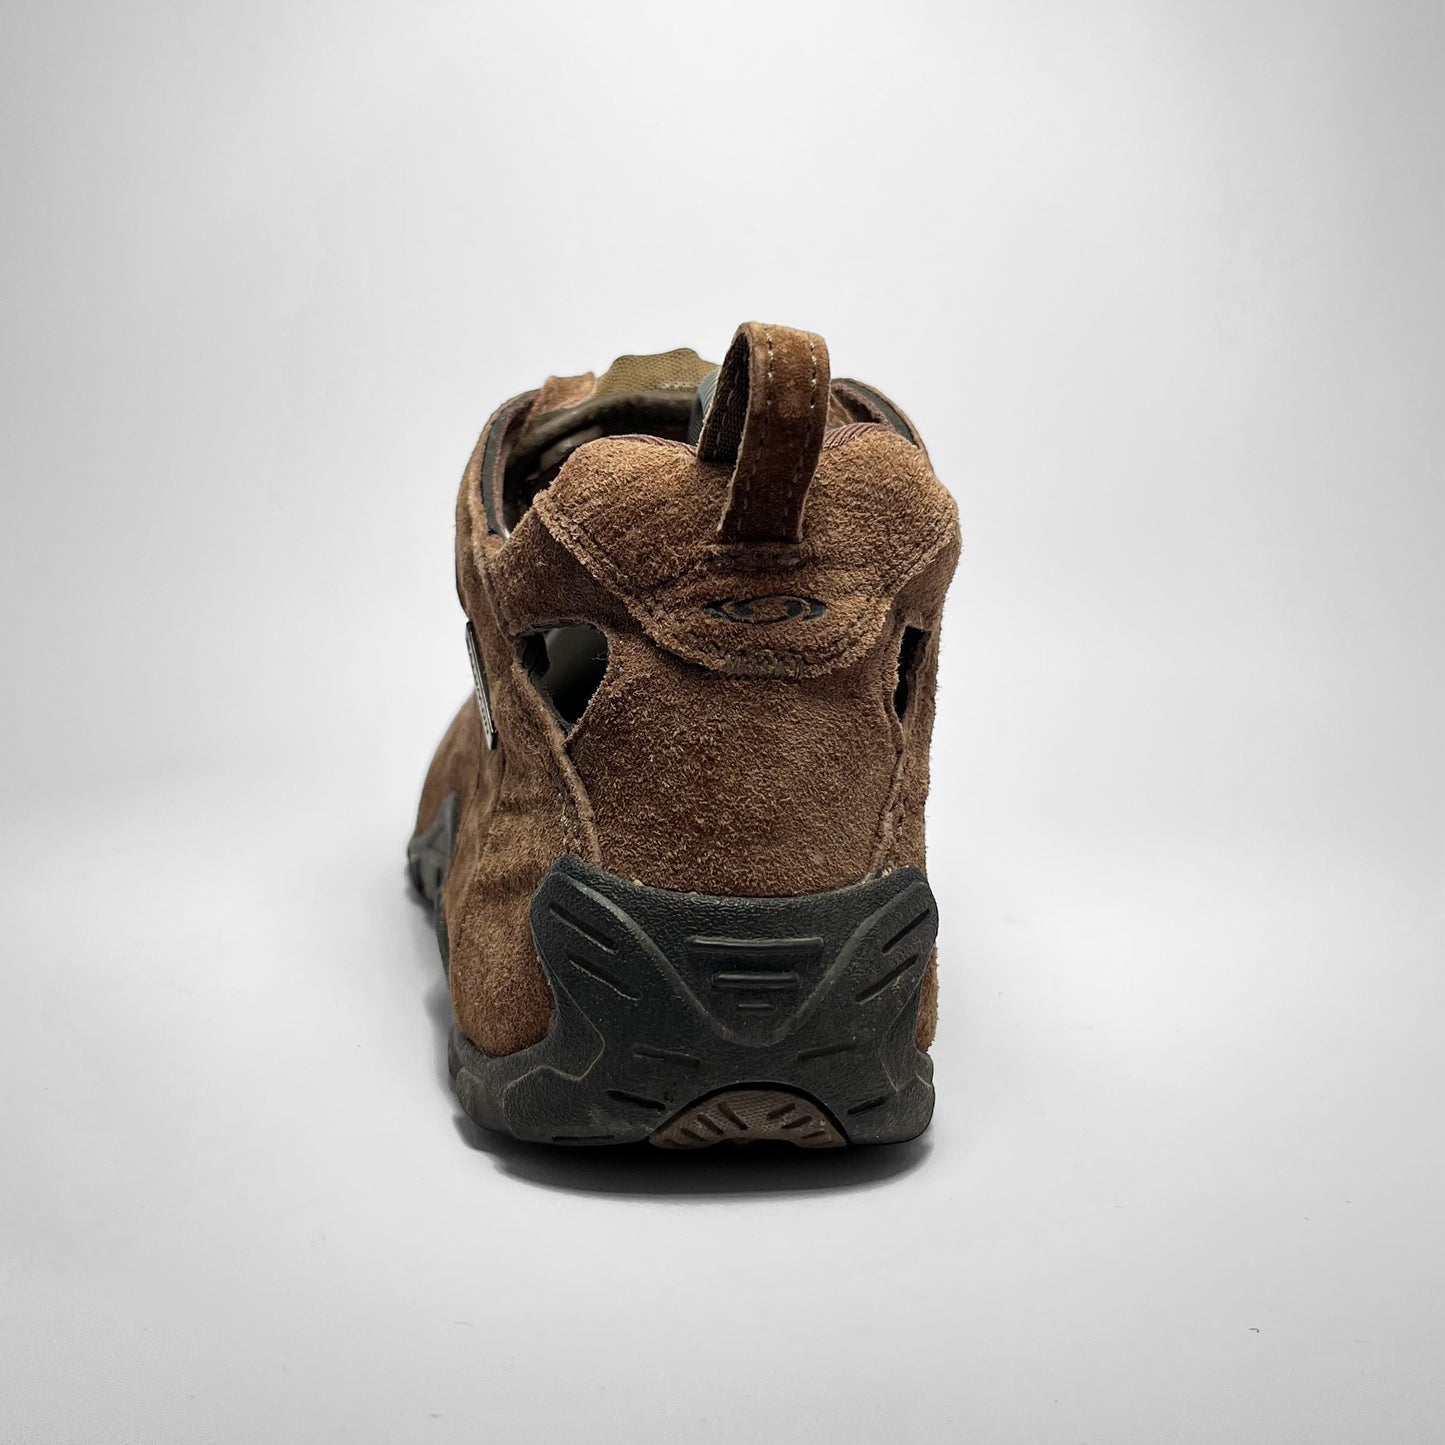 Salomon Suede Trekking Sandals (2000s)